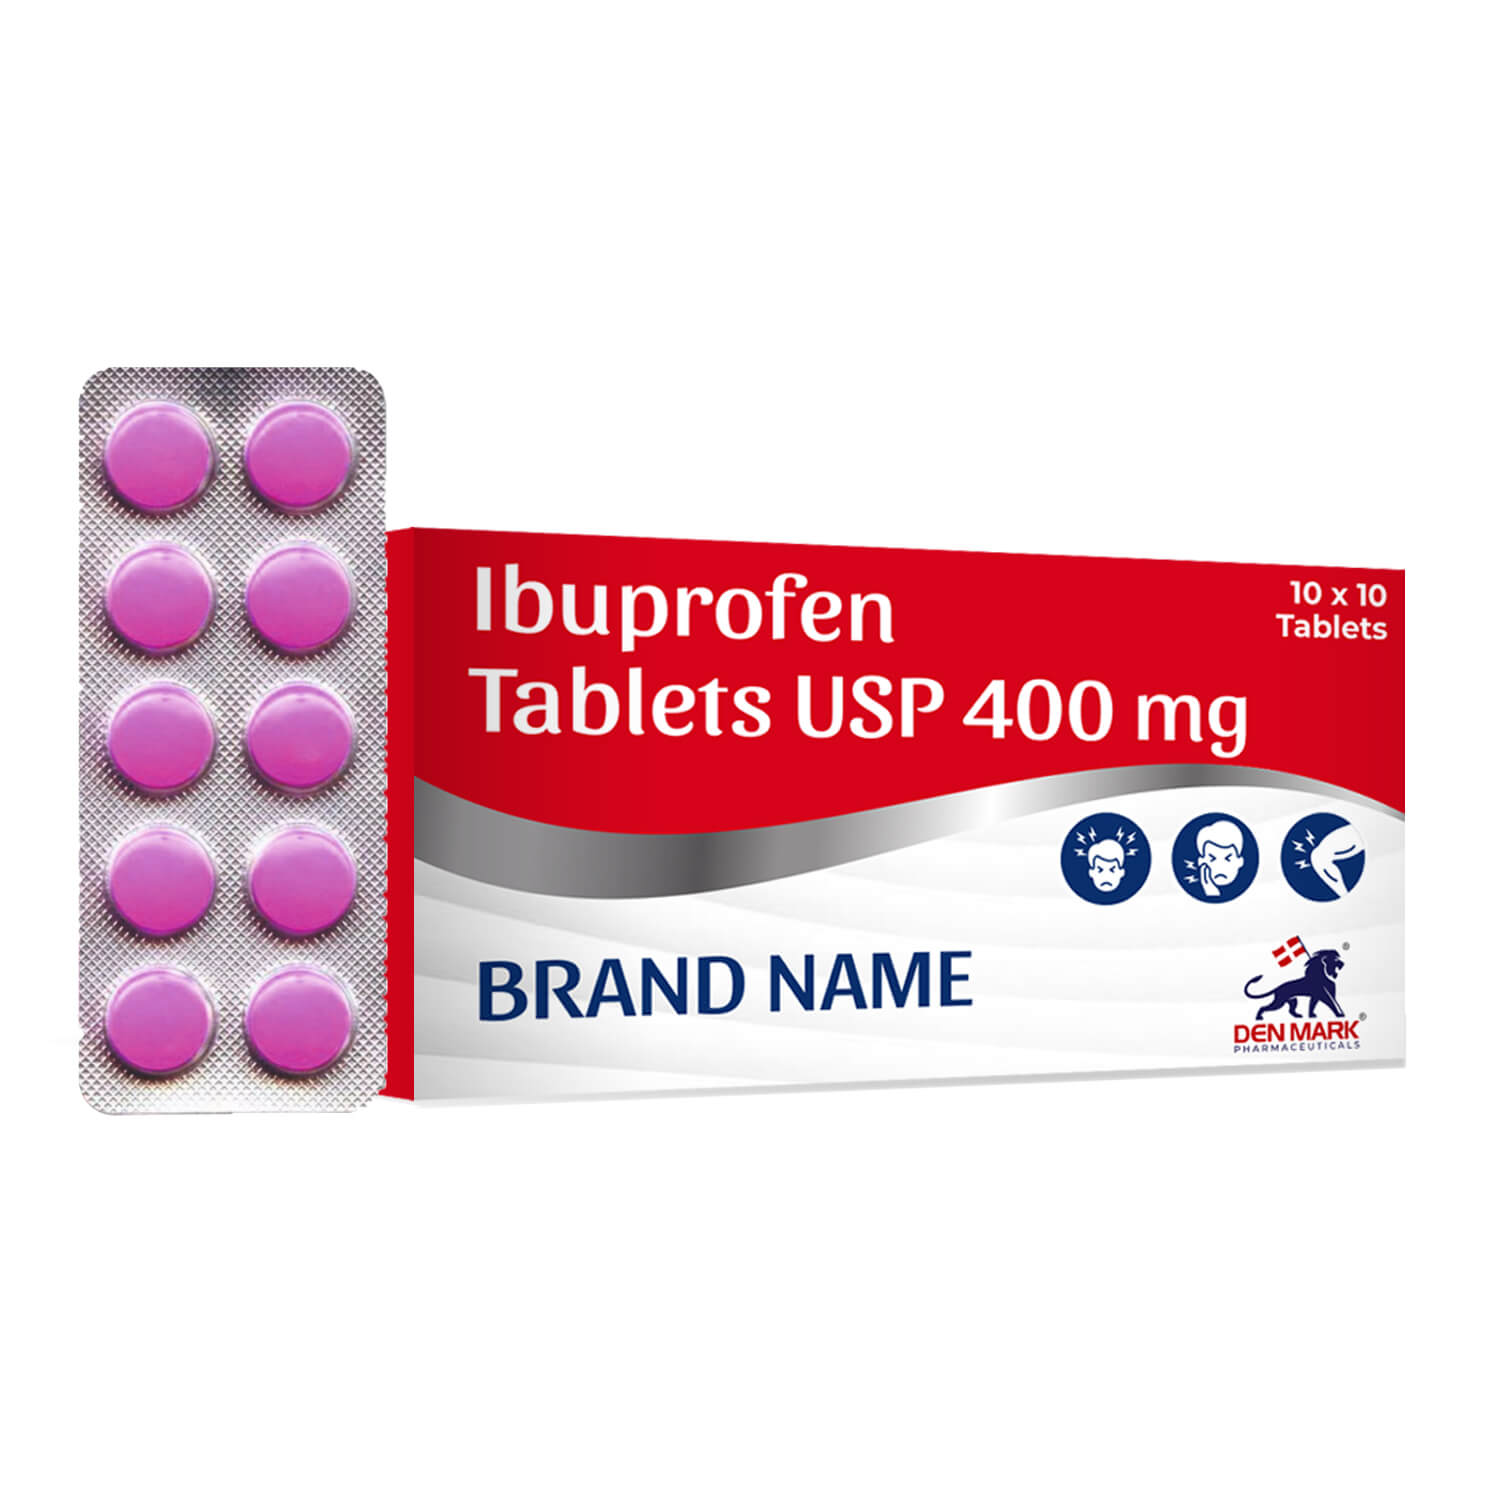 Ibuprofen 400 mg Tablets